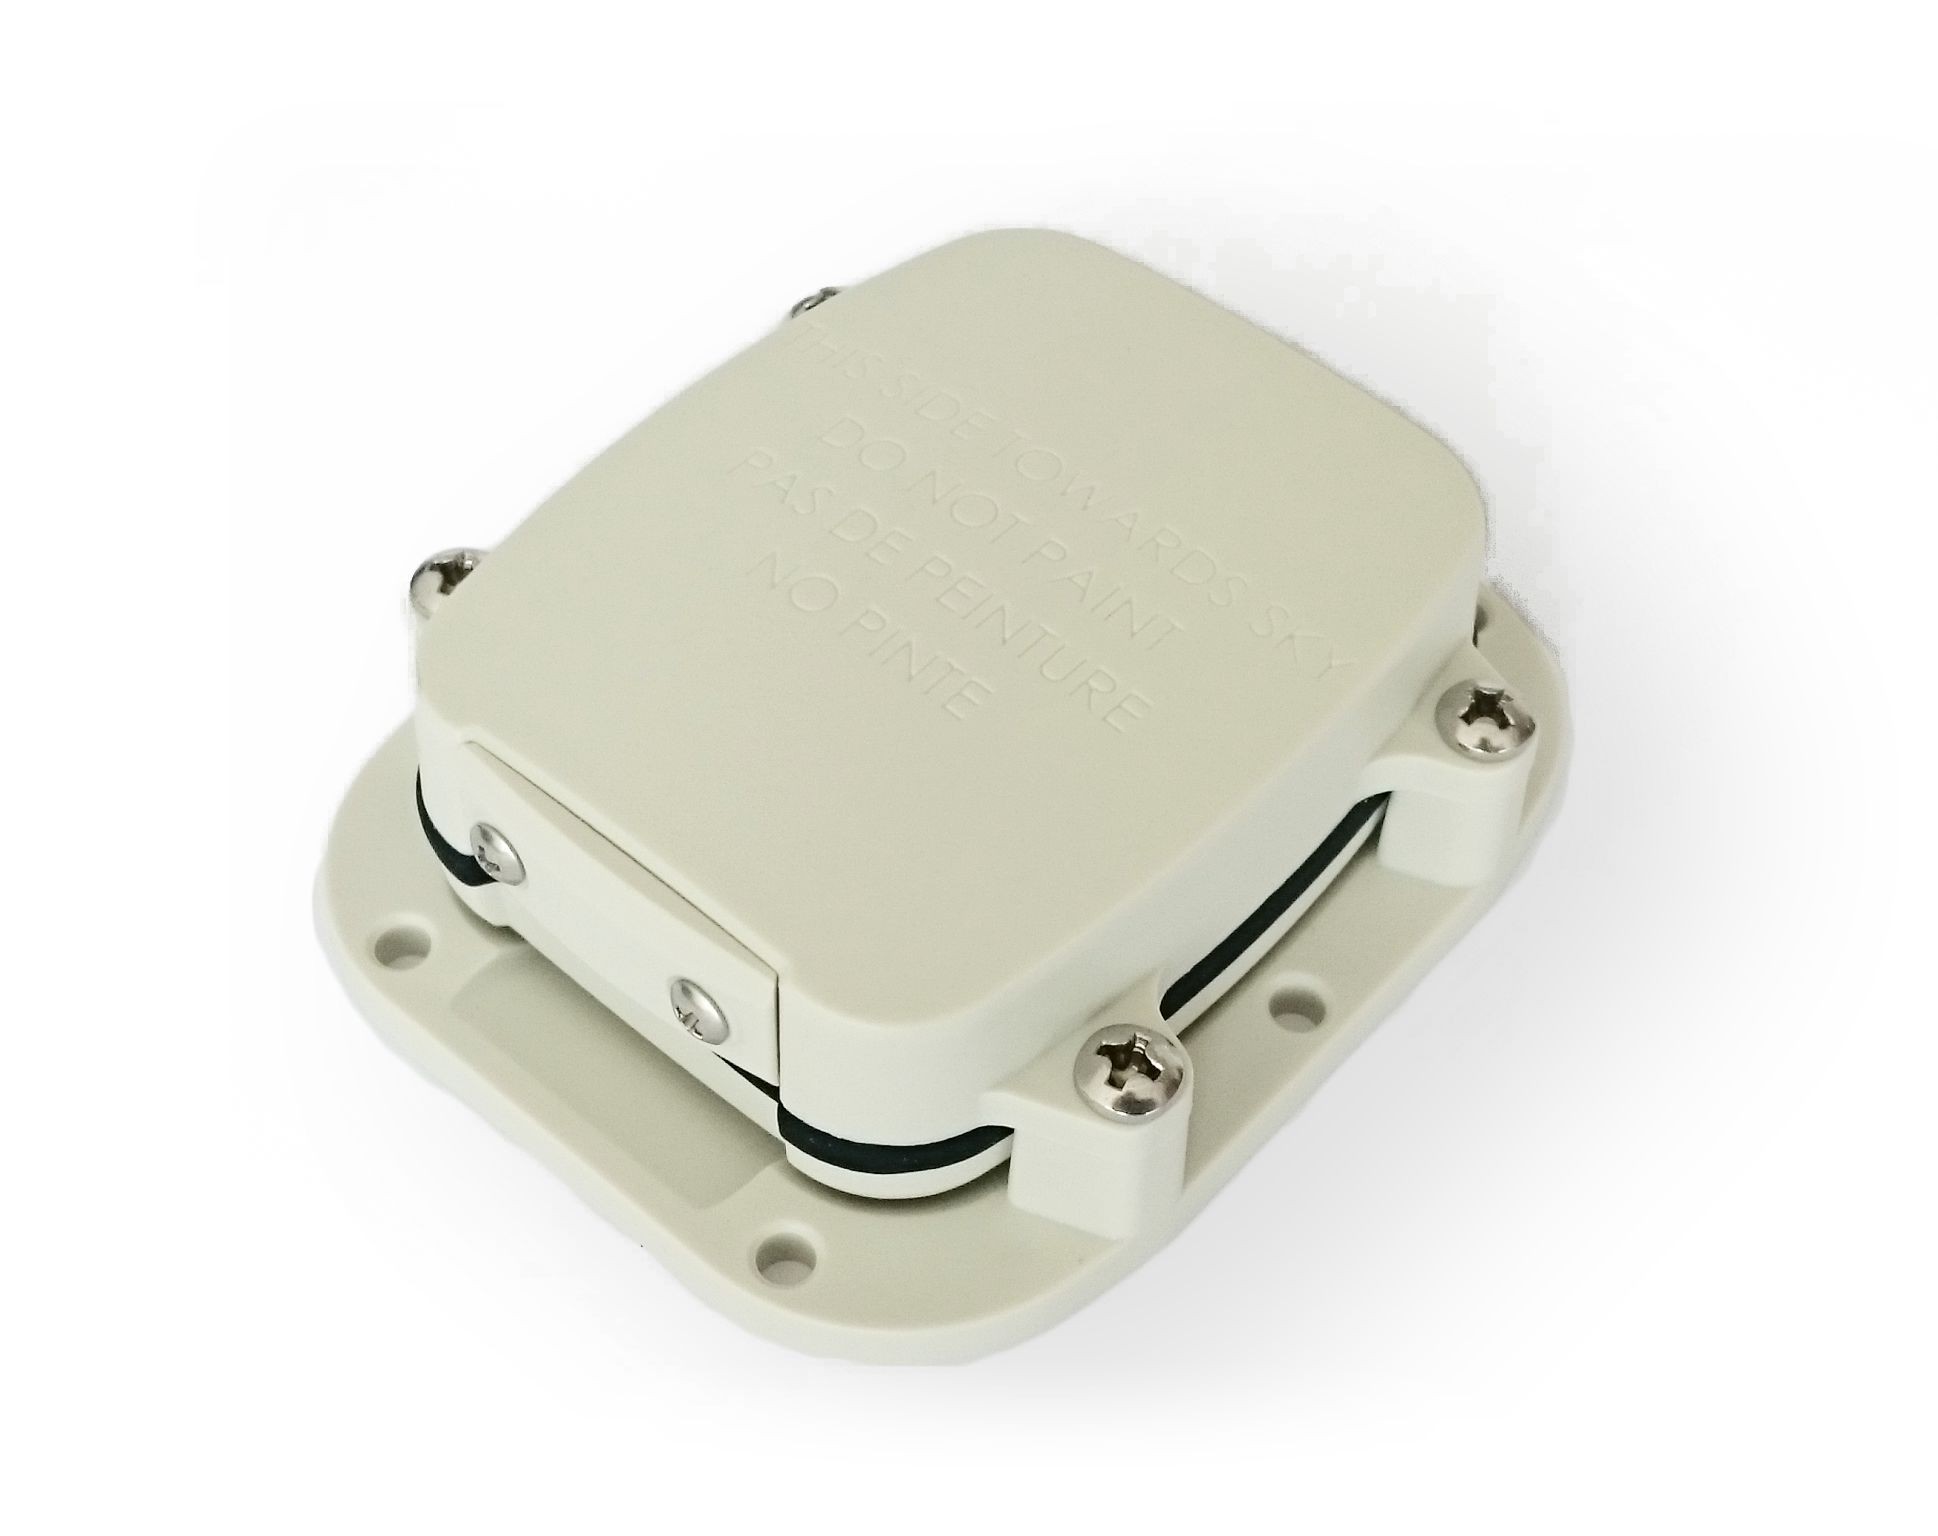  GPS-Tracker SmartOne-C (Satelliten-Tracker)